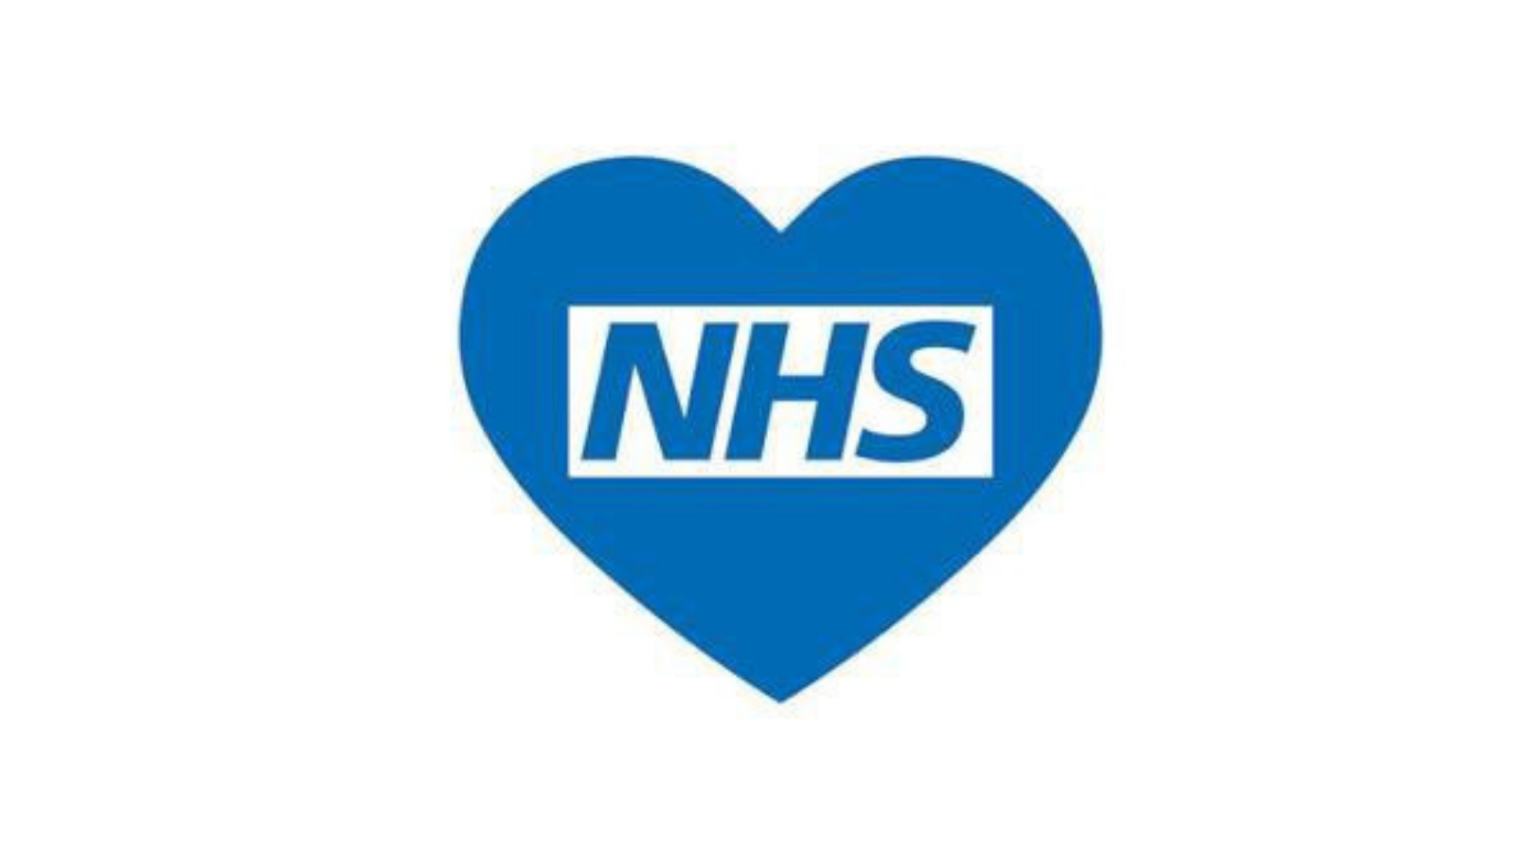 NHS blue heart